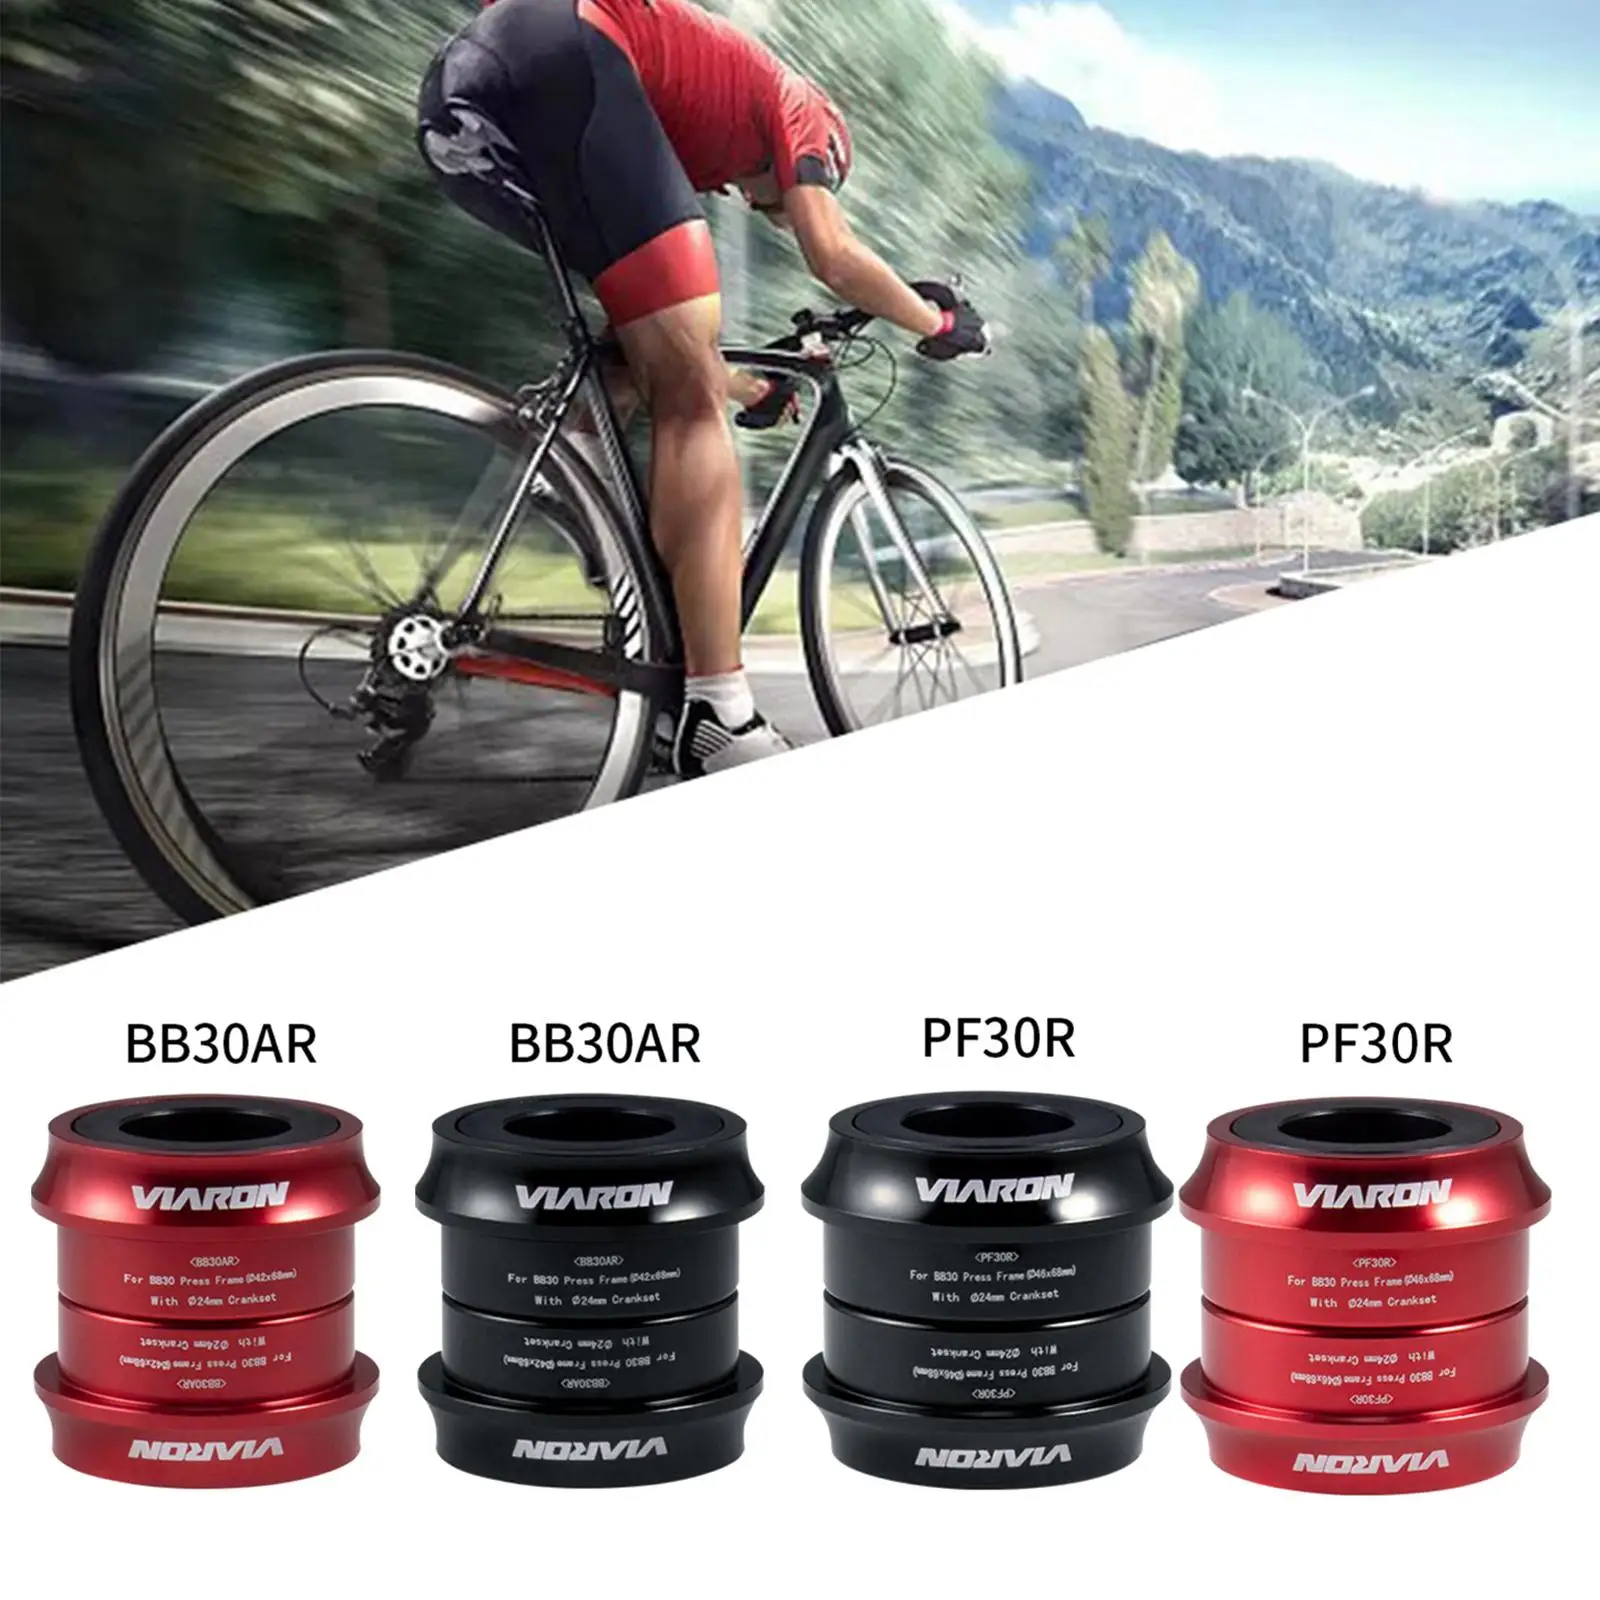 Press Fit Bike Bicycle Bottom Bracket For Crankset BB30/PF30 24mm